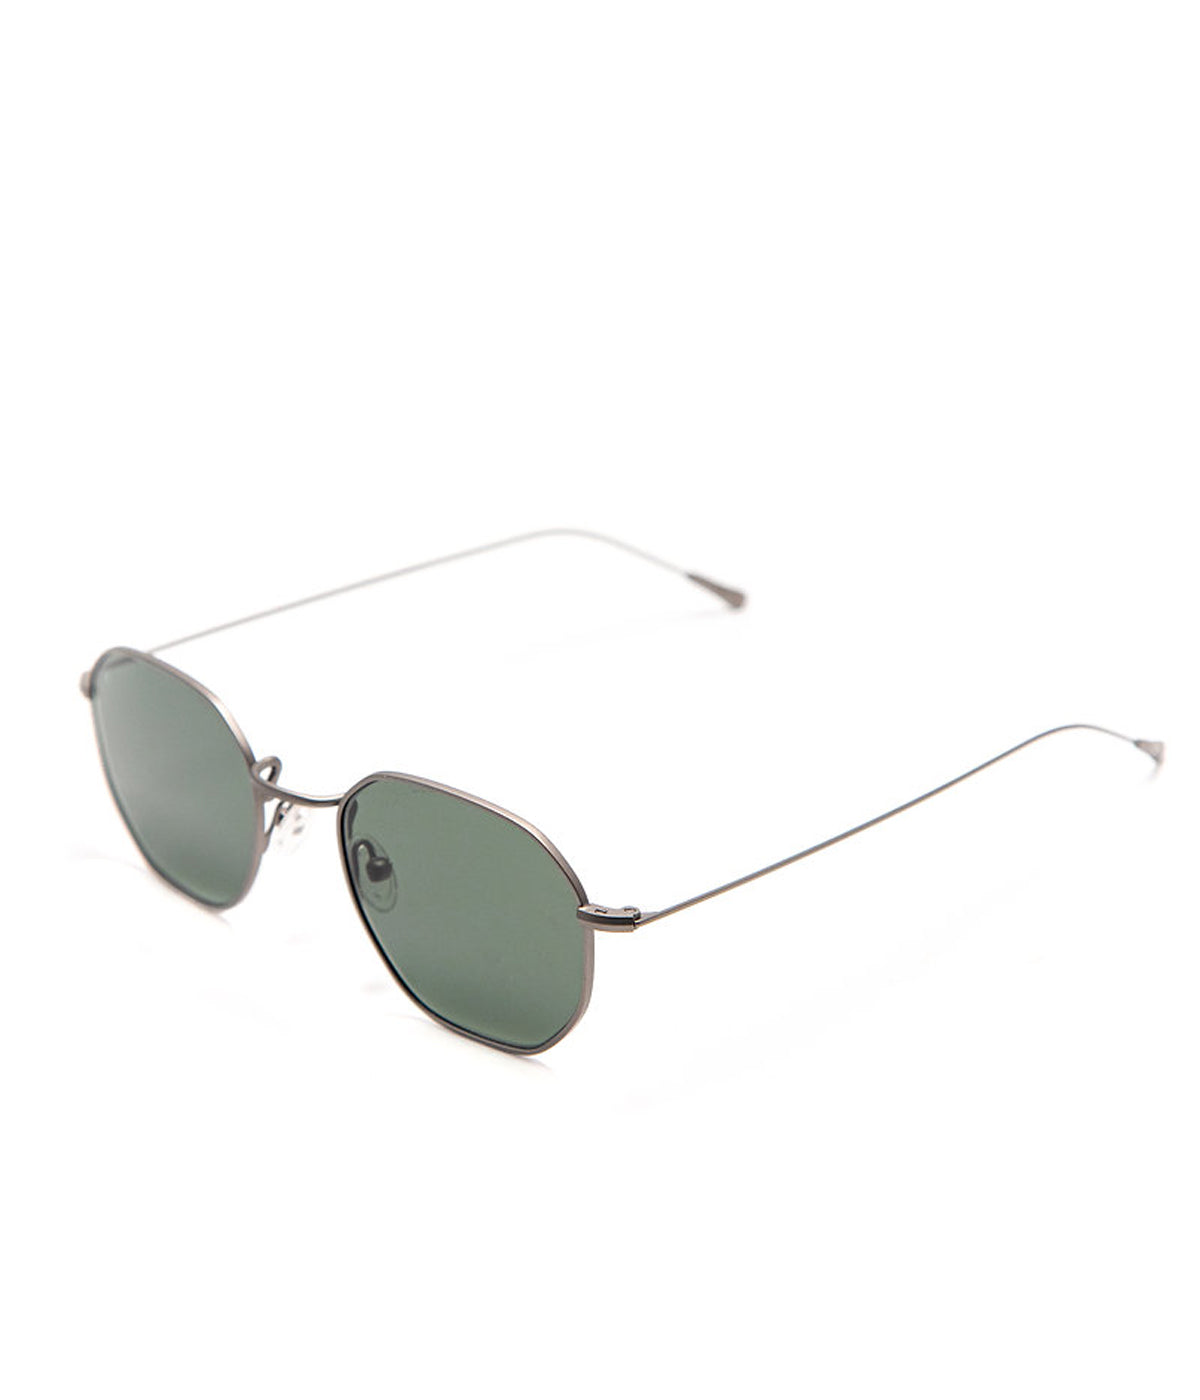 Karl Sunglasses in Silver